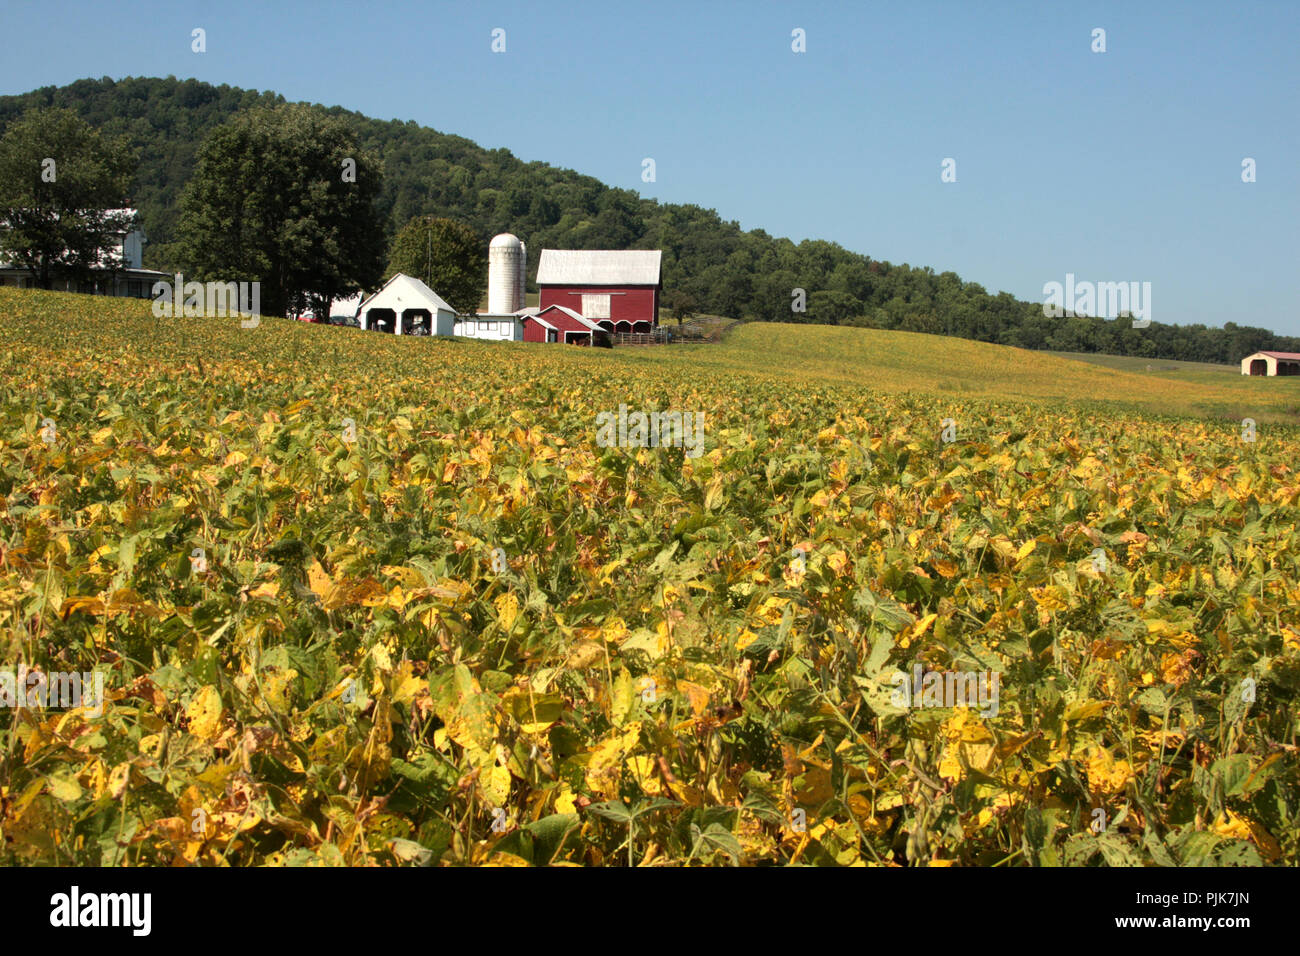 Farm in rural Virginia. Soybean culture. Stock Photo